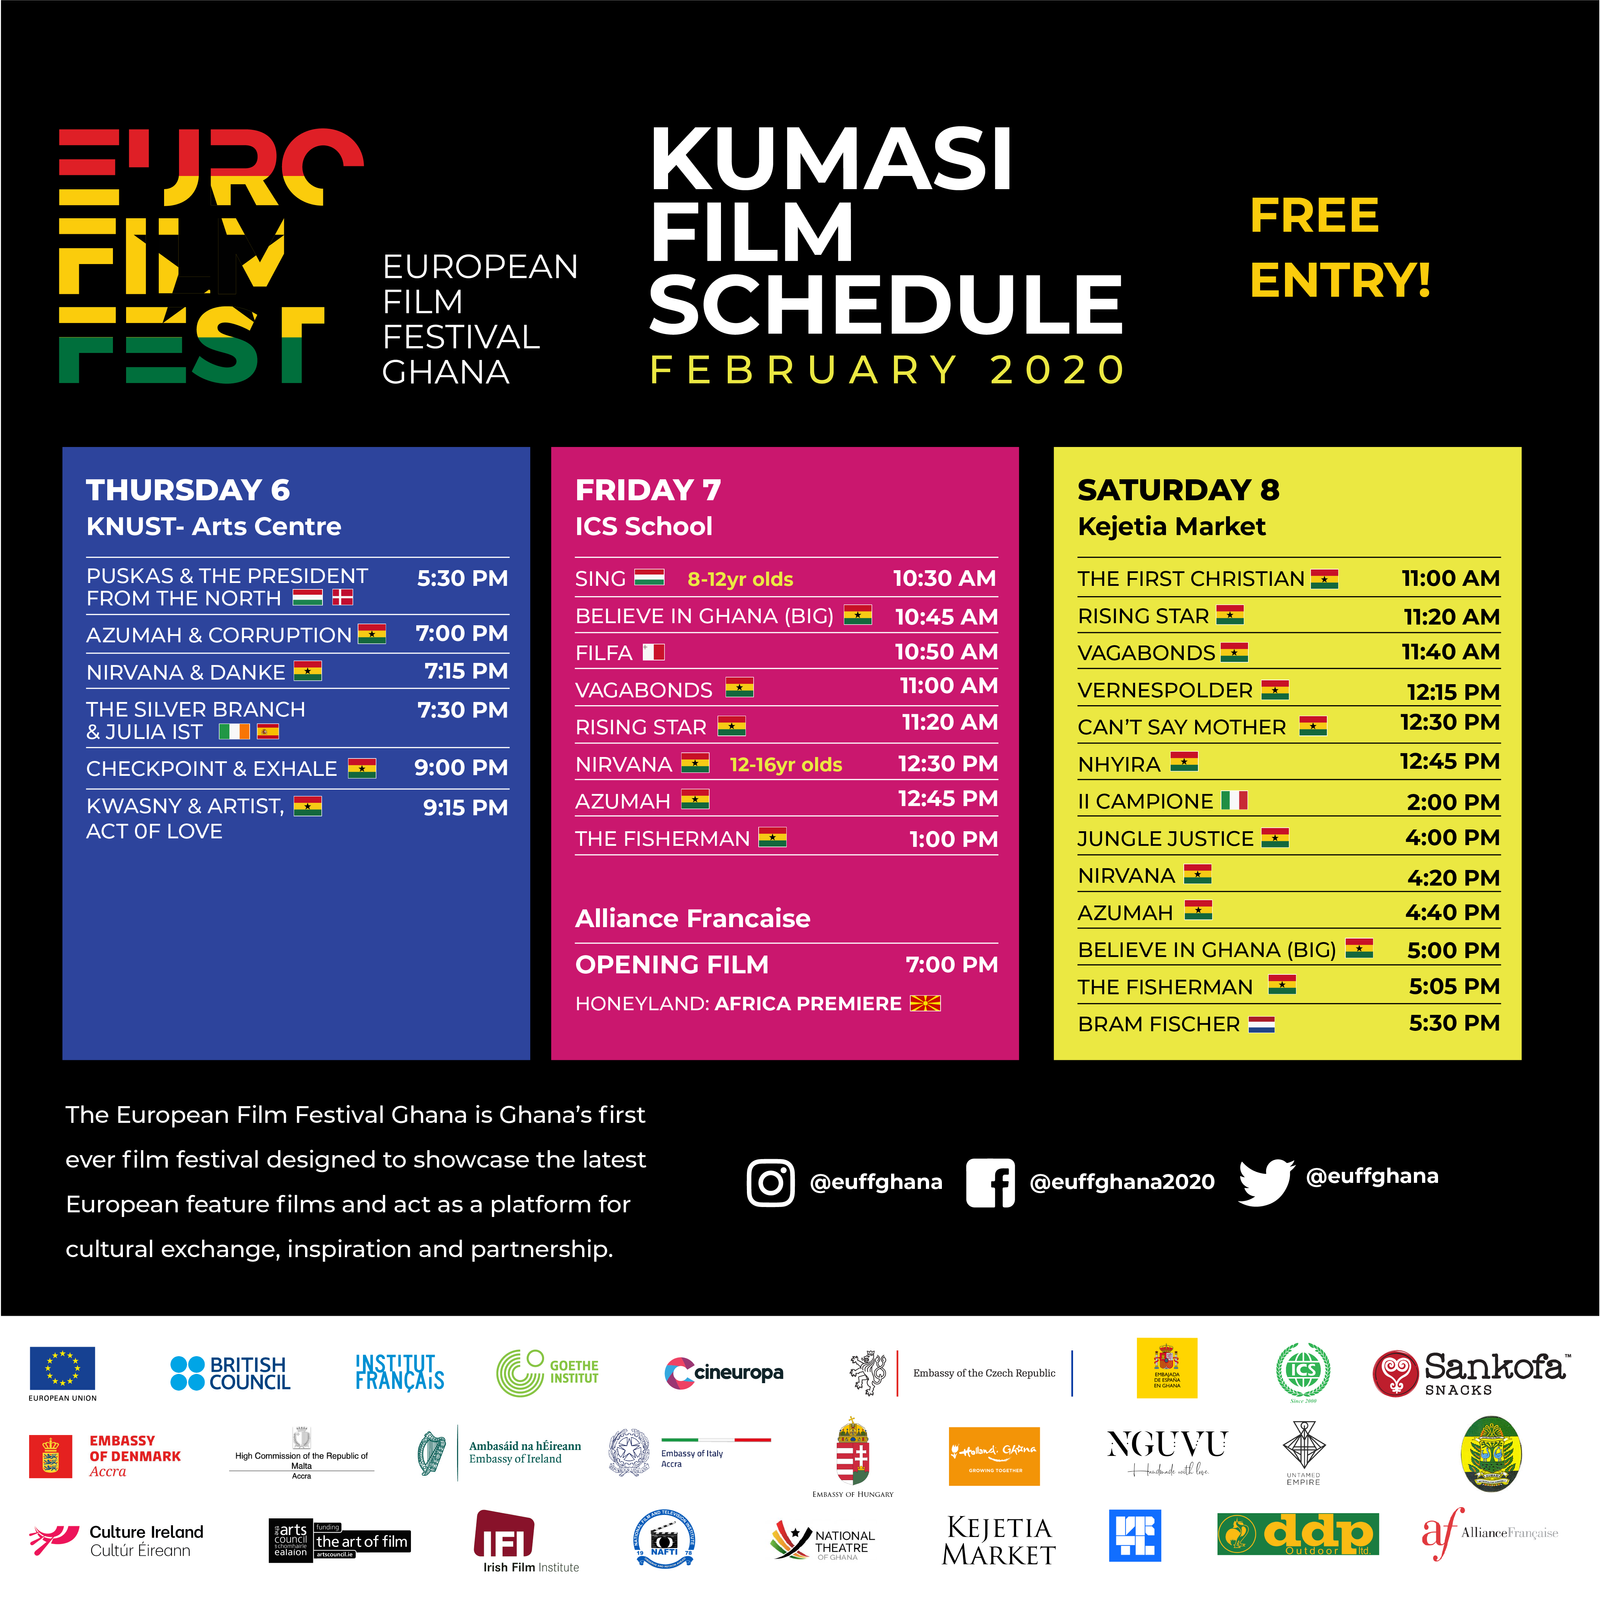 EUFF Film Schedule_Kumasi Schedule